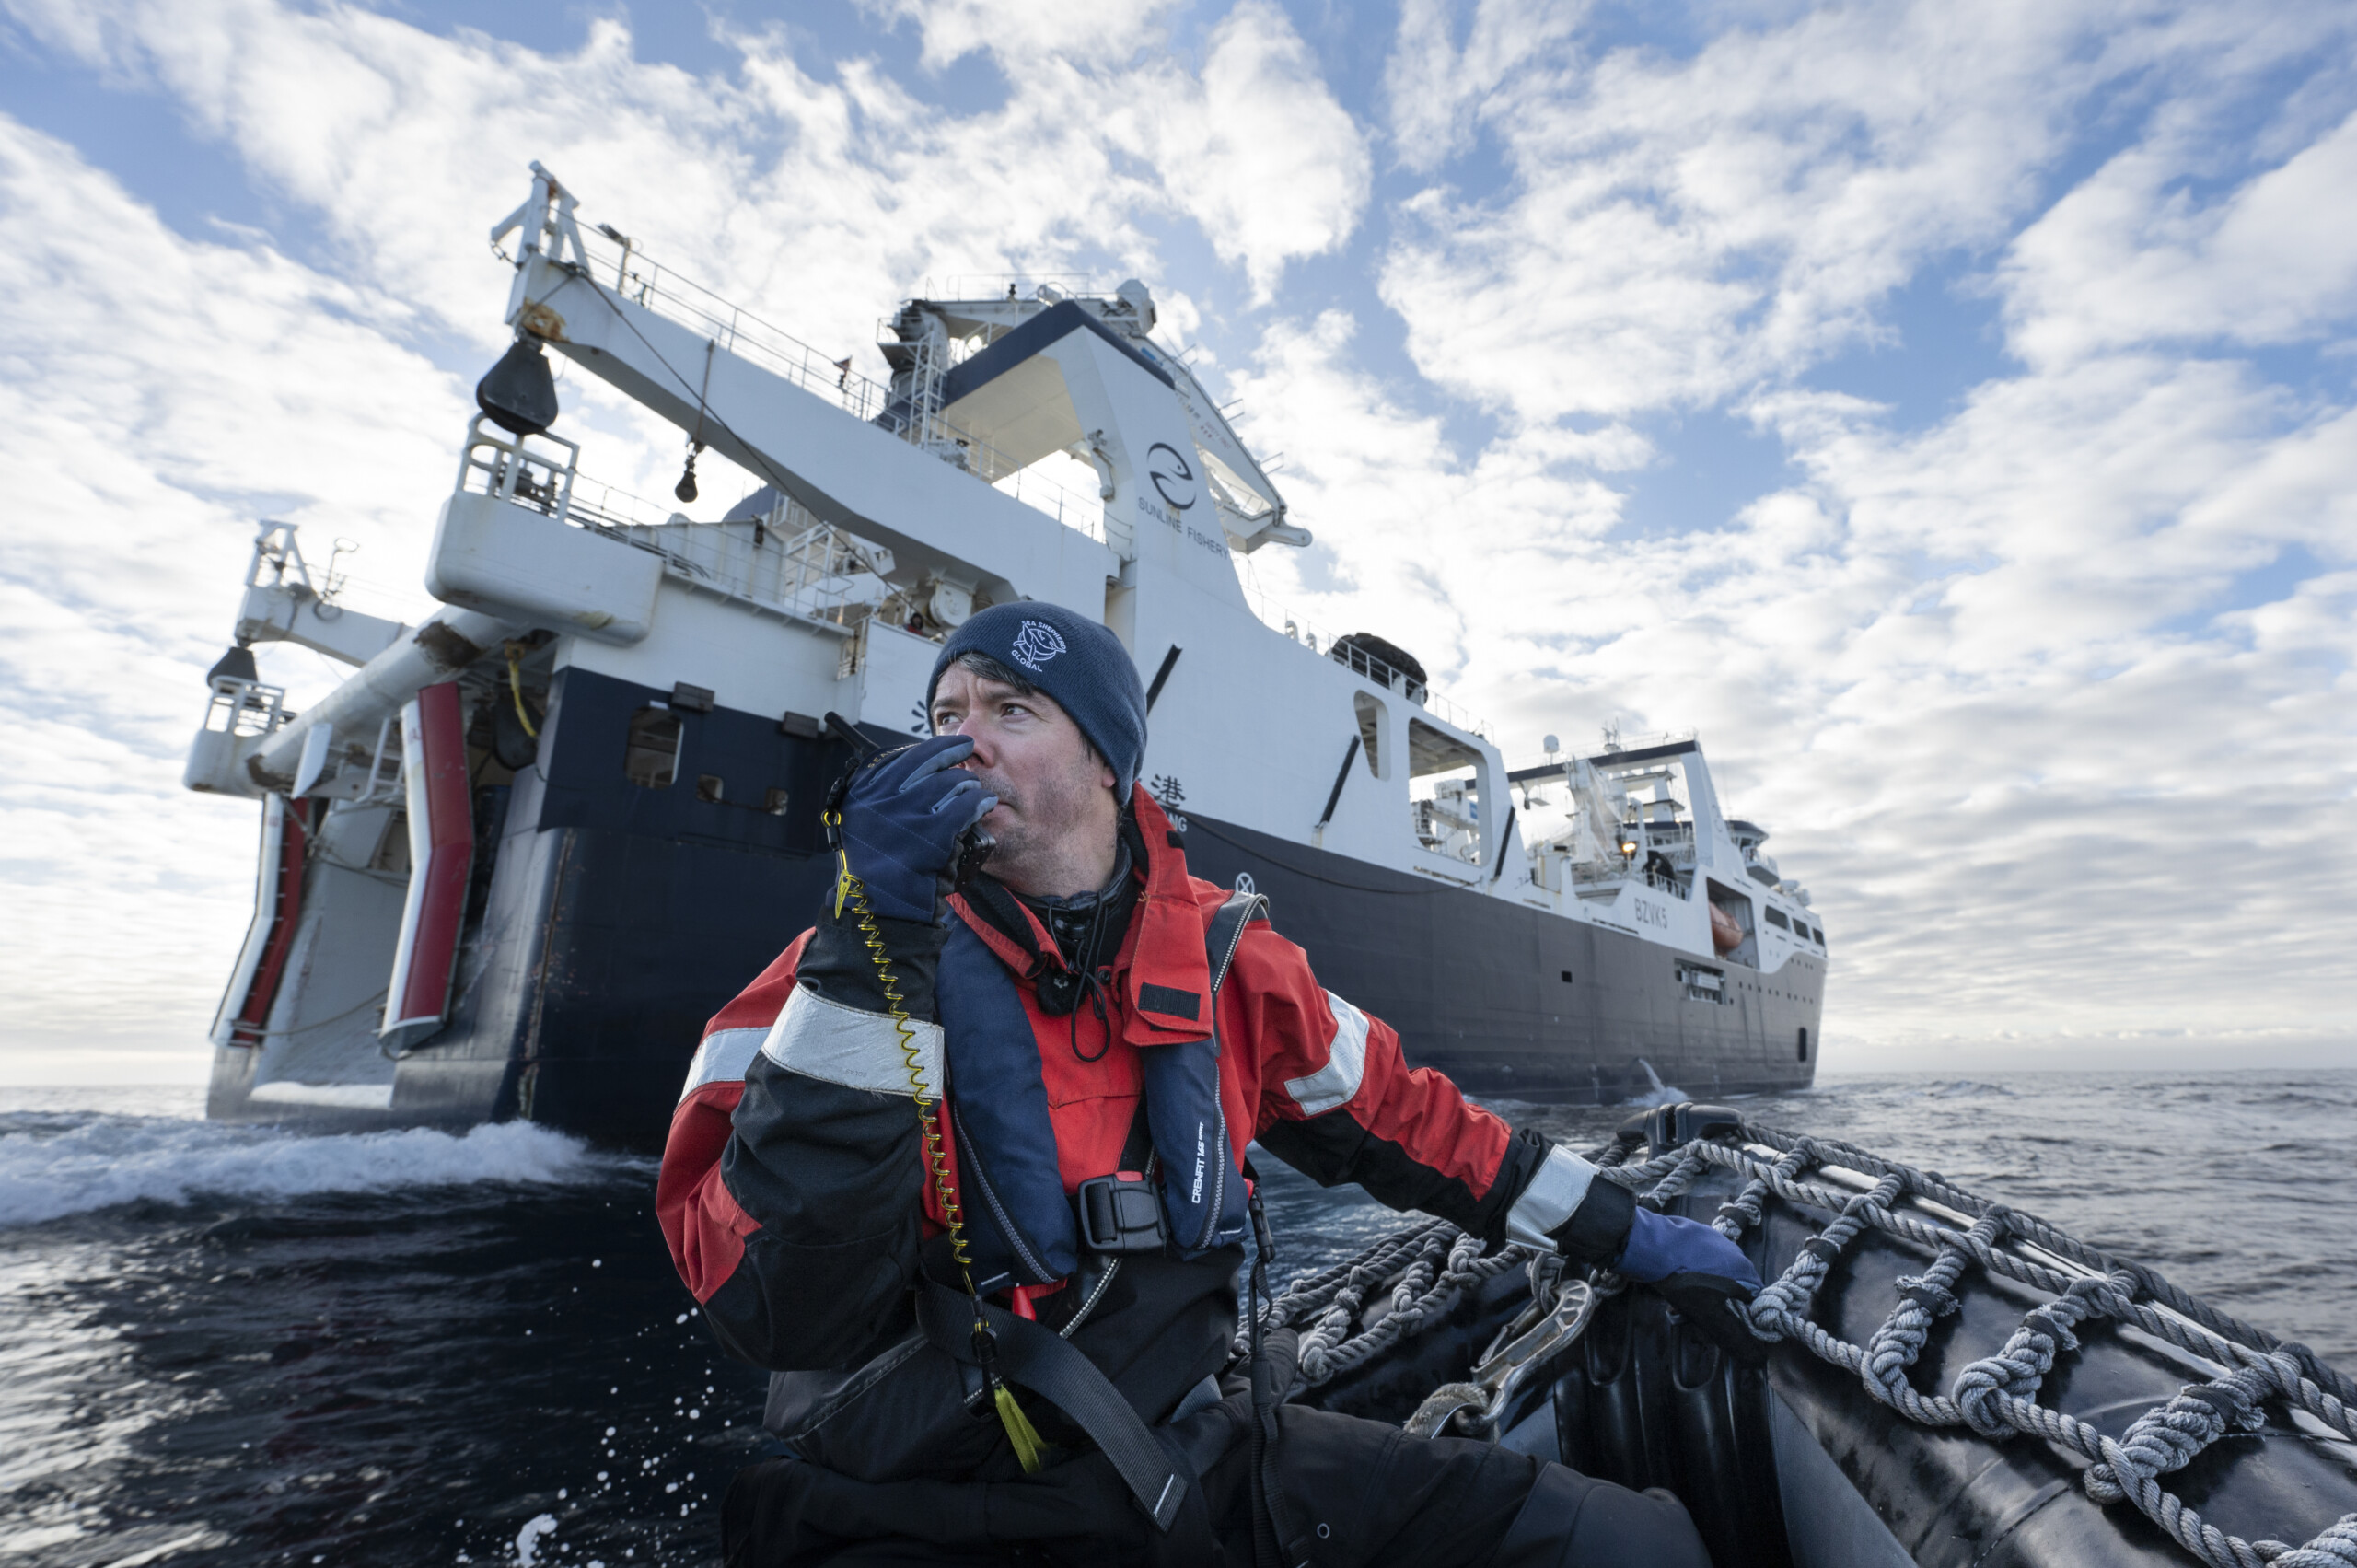 An Ecosystem in Danger – Sea Shepherd is Targeting the Krill Fishery